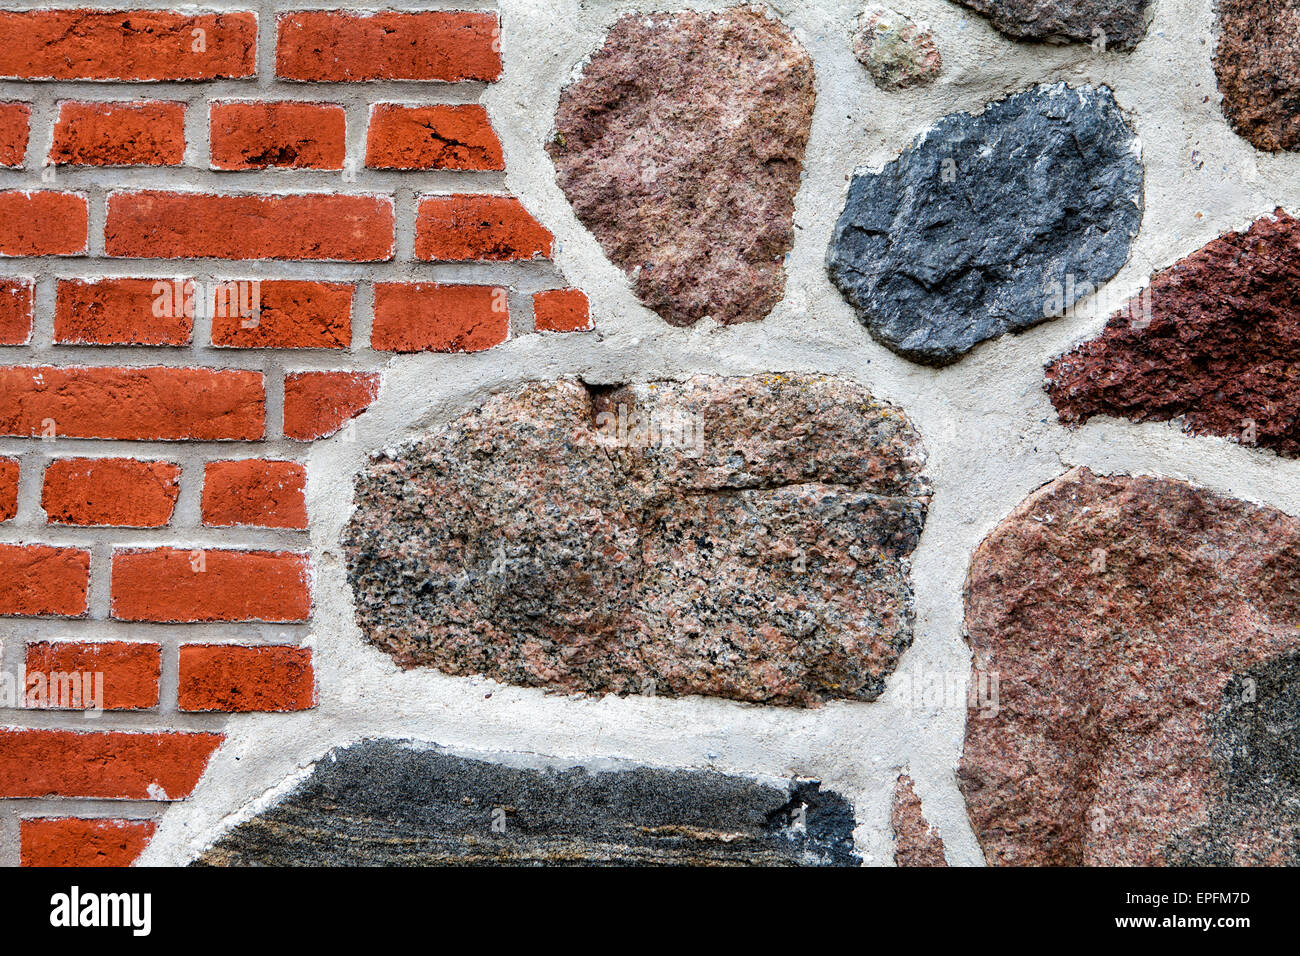 Stone wall made of erratics and bricks, Lower Saxony, Germany, Europe Stock Photo